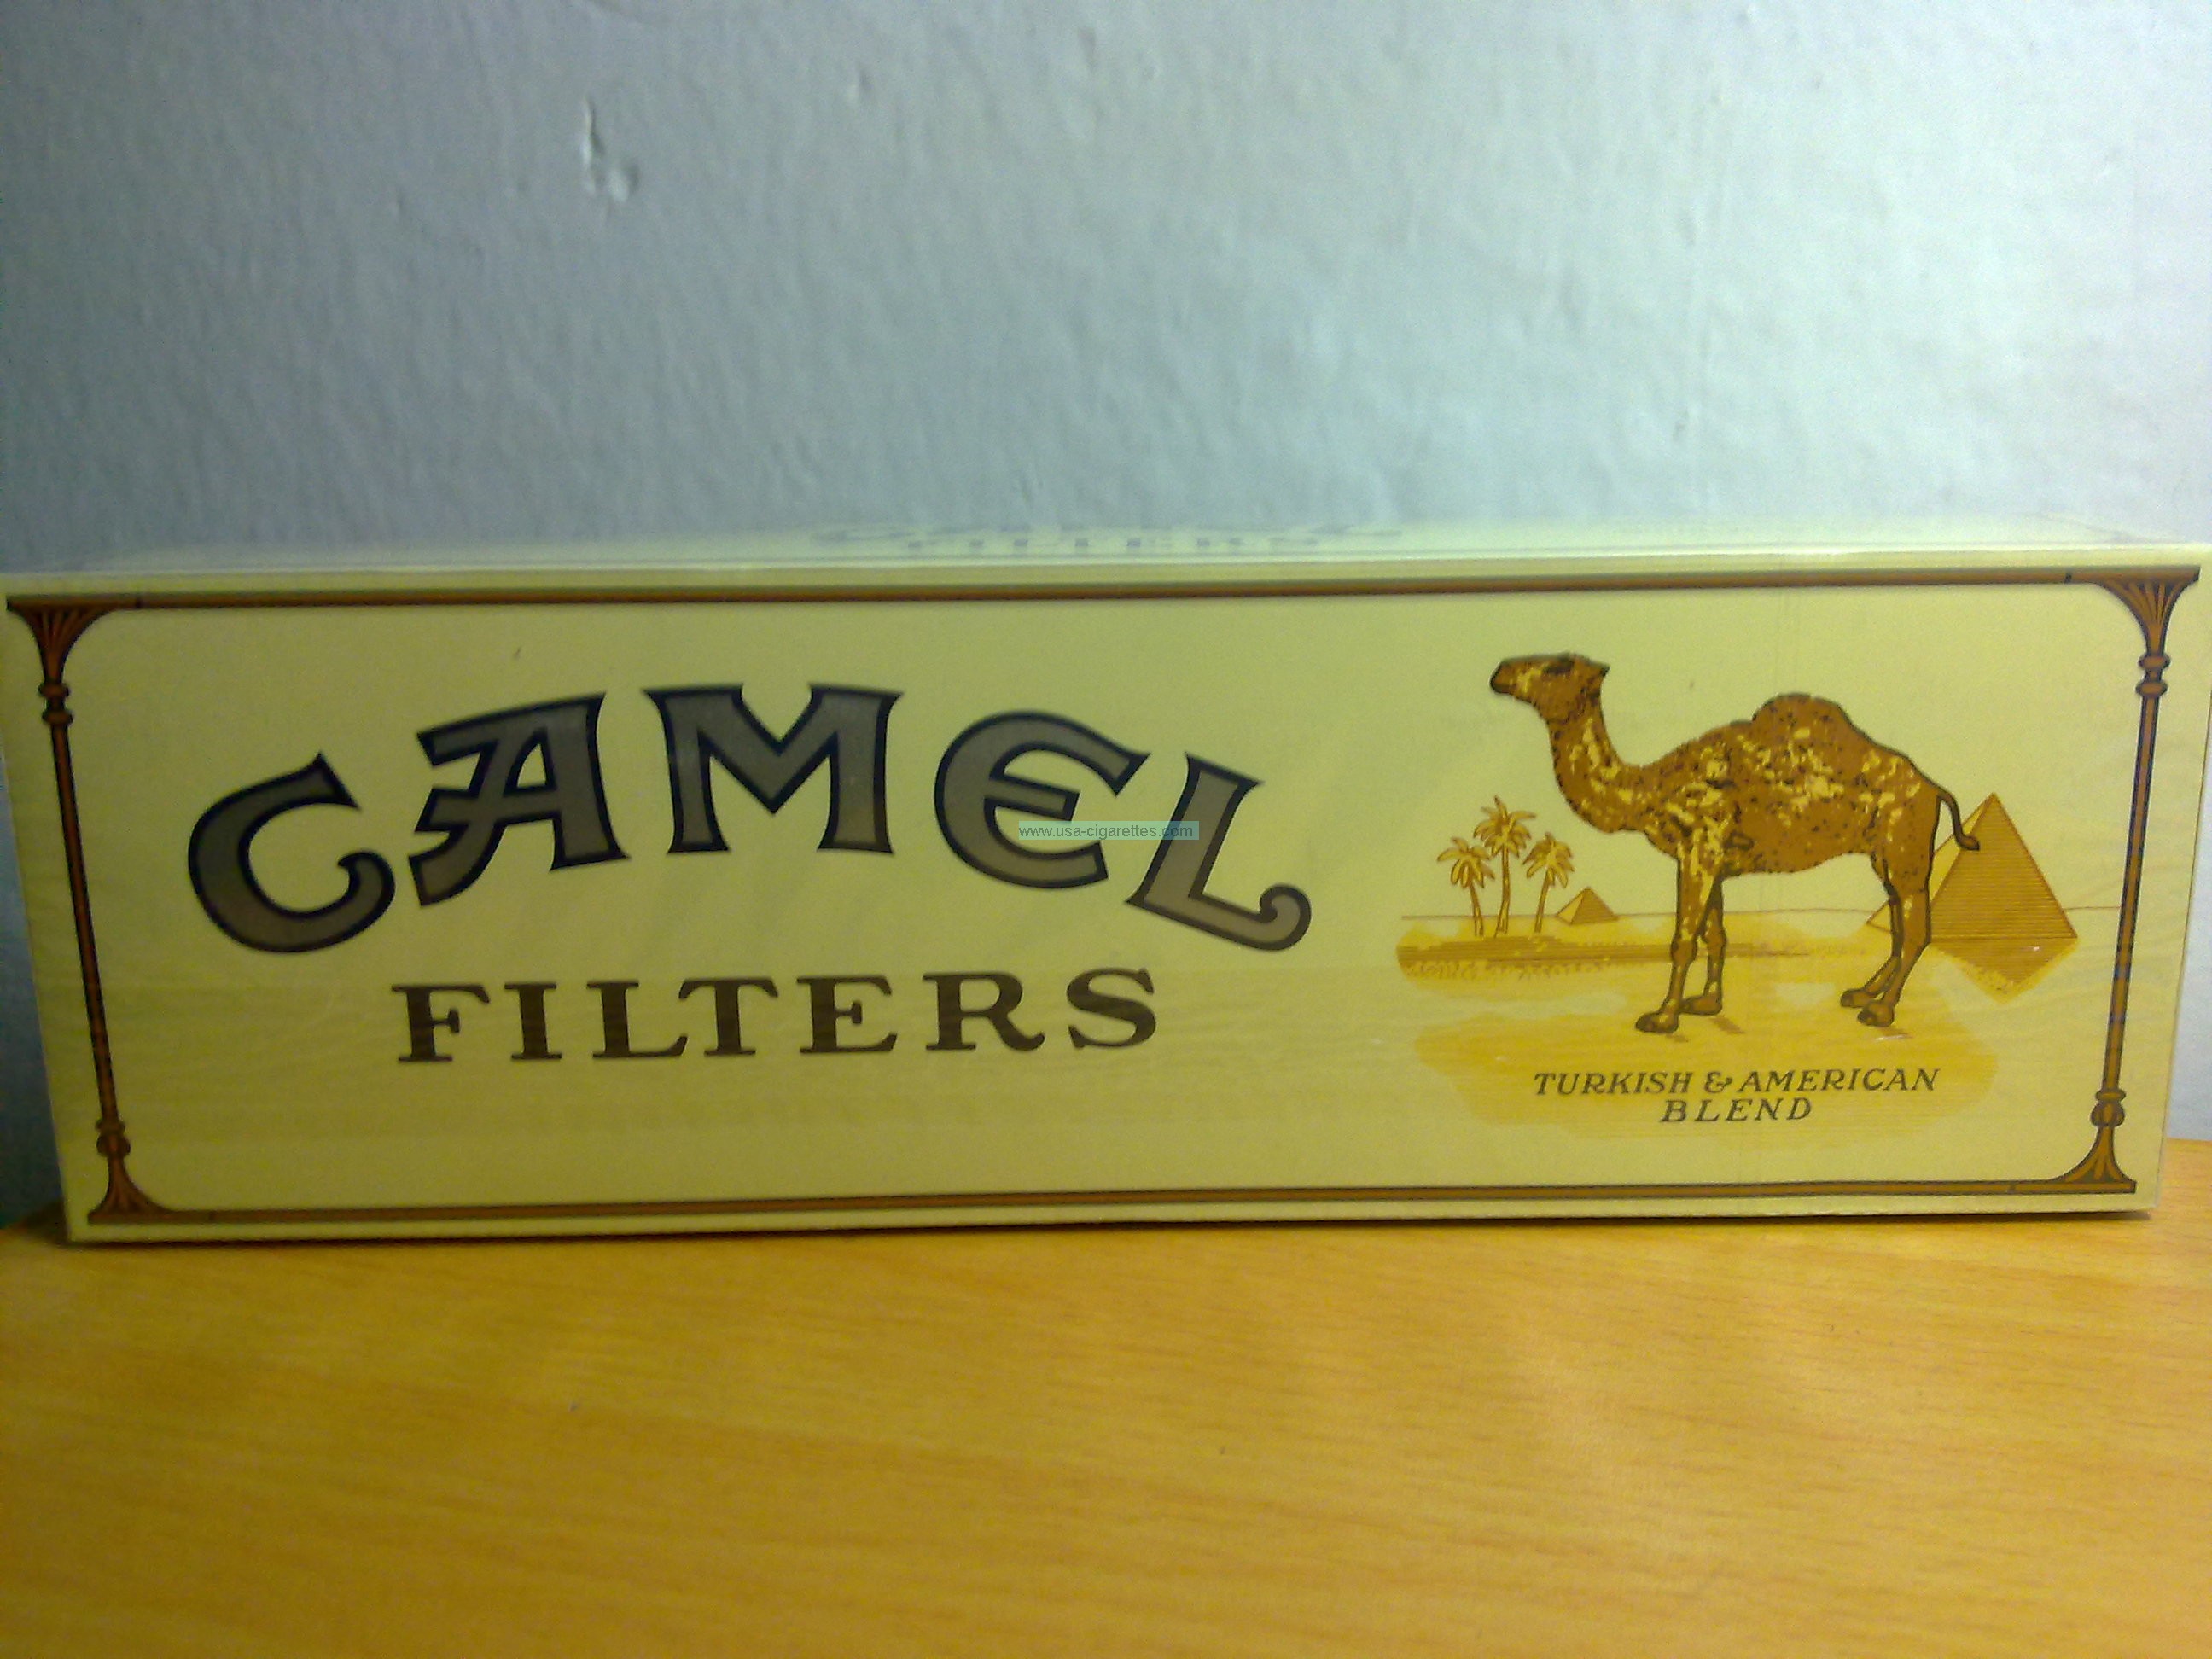 camel filters gold cigarettes